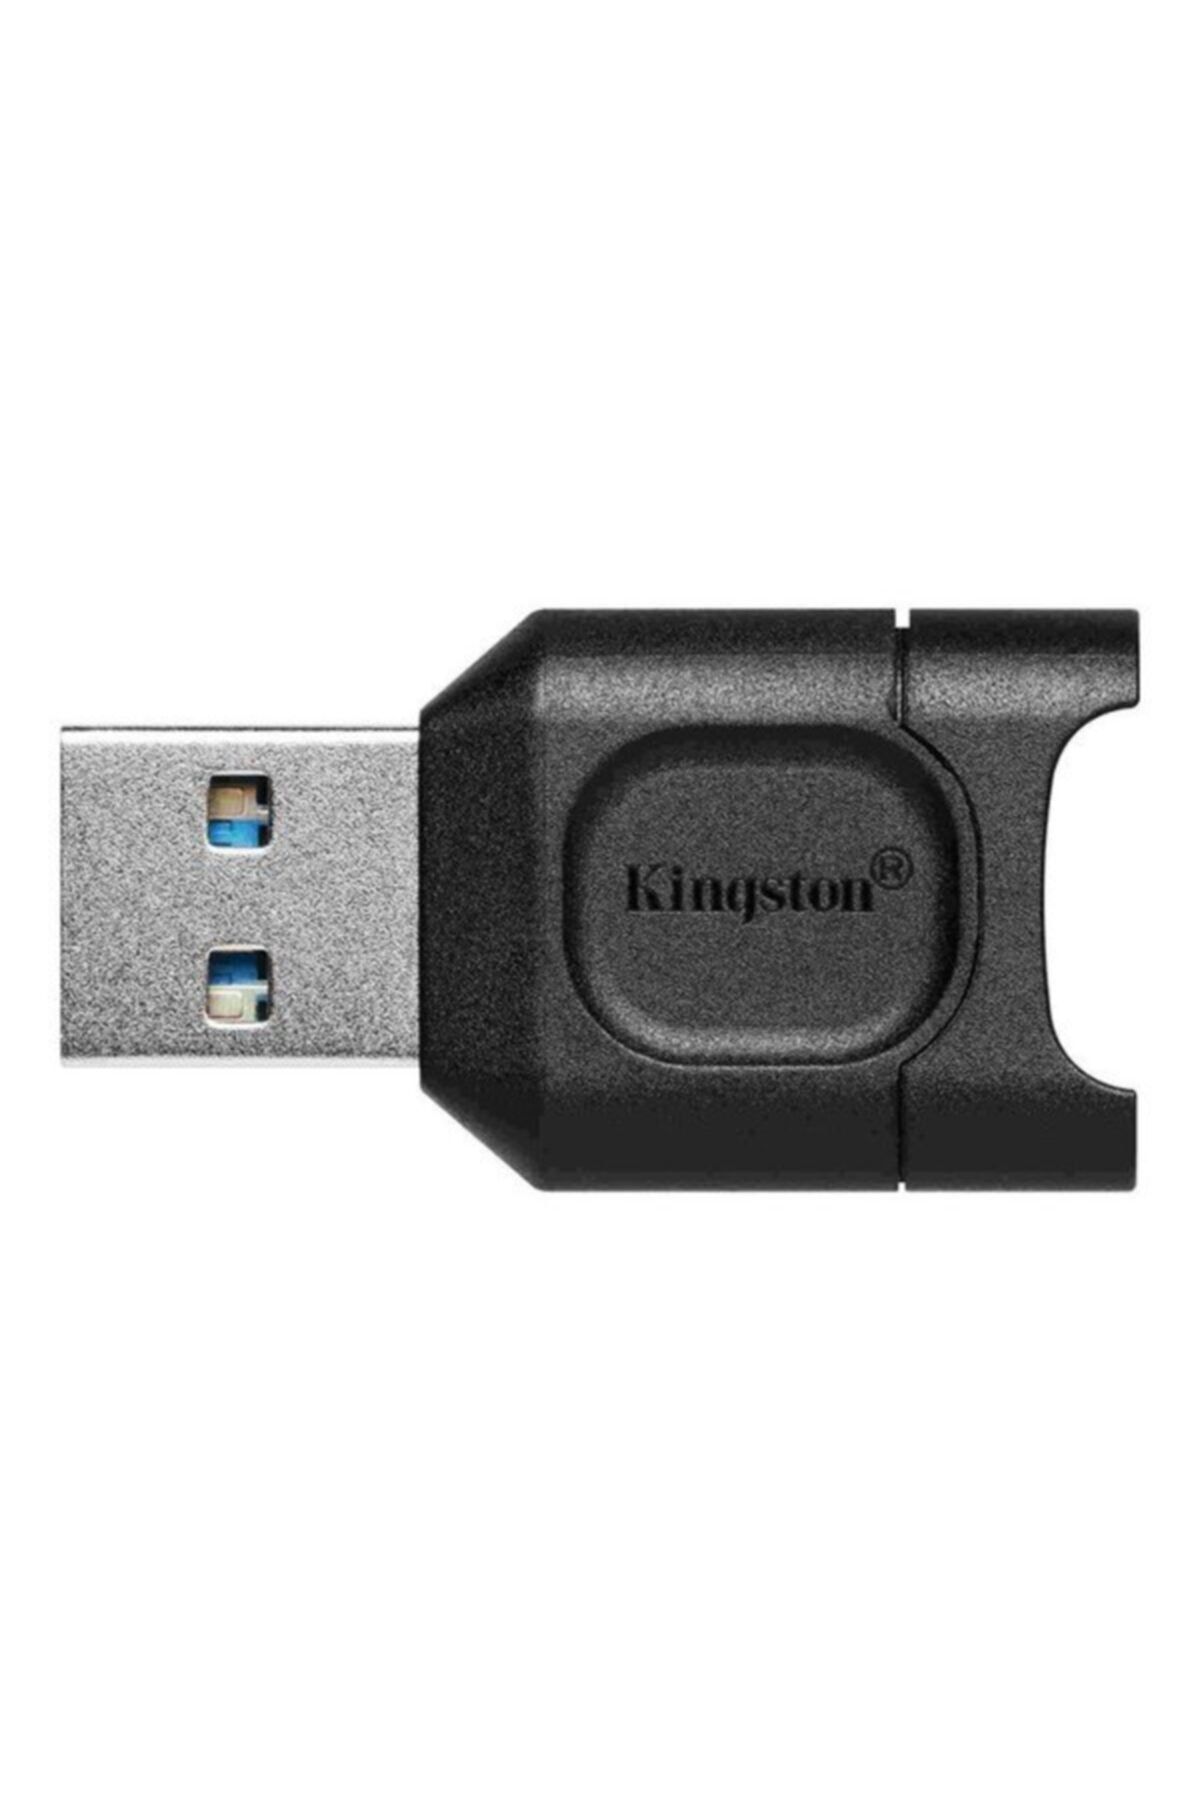 Kingston Mlpm Mobilelite Plus Usb 3.1 Microsdhc-sdxc Uhs-ıı Card Reader